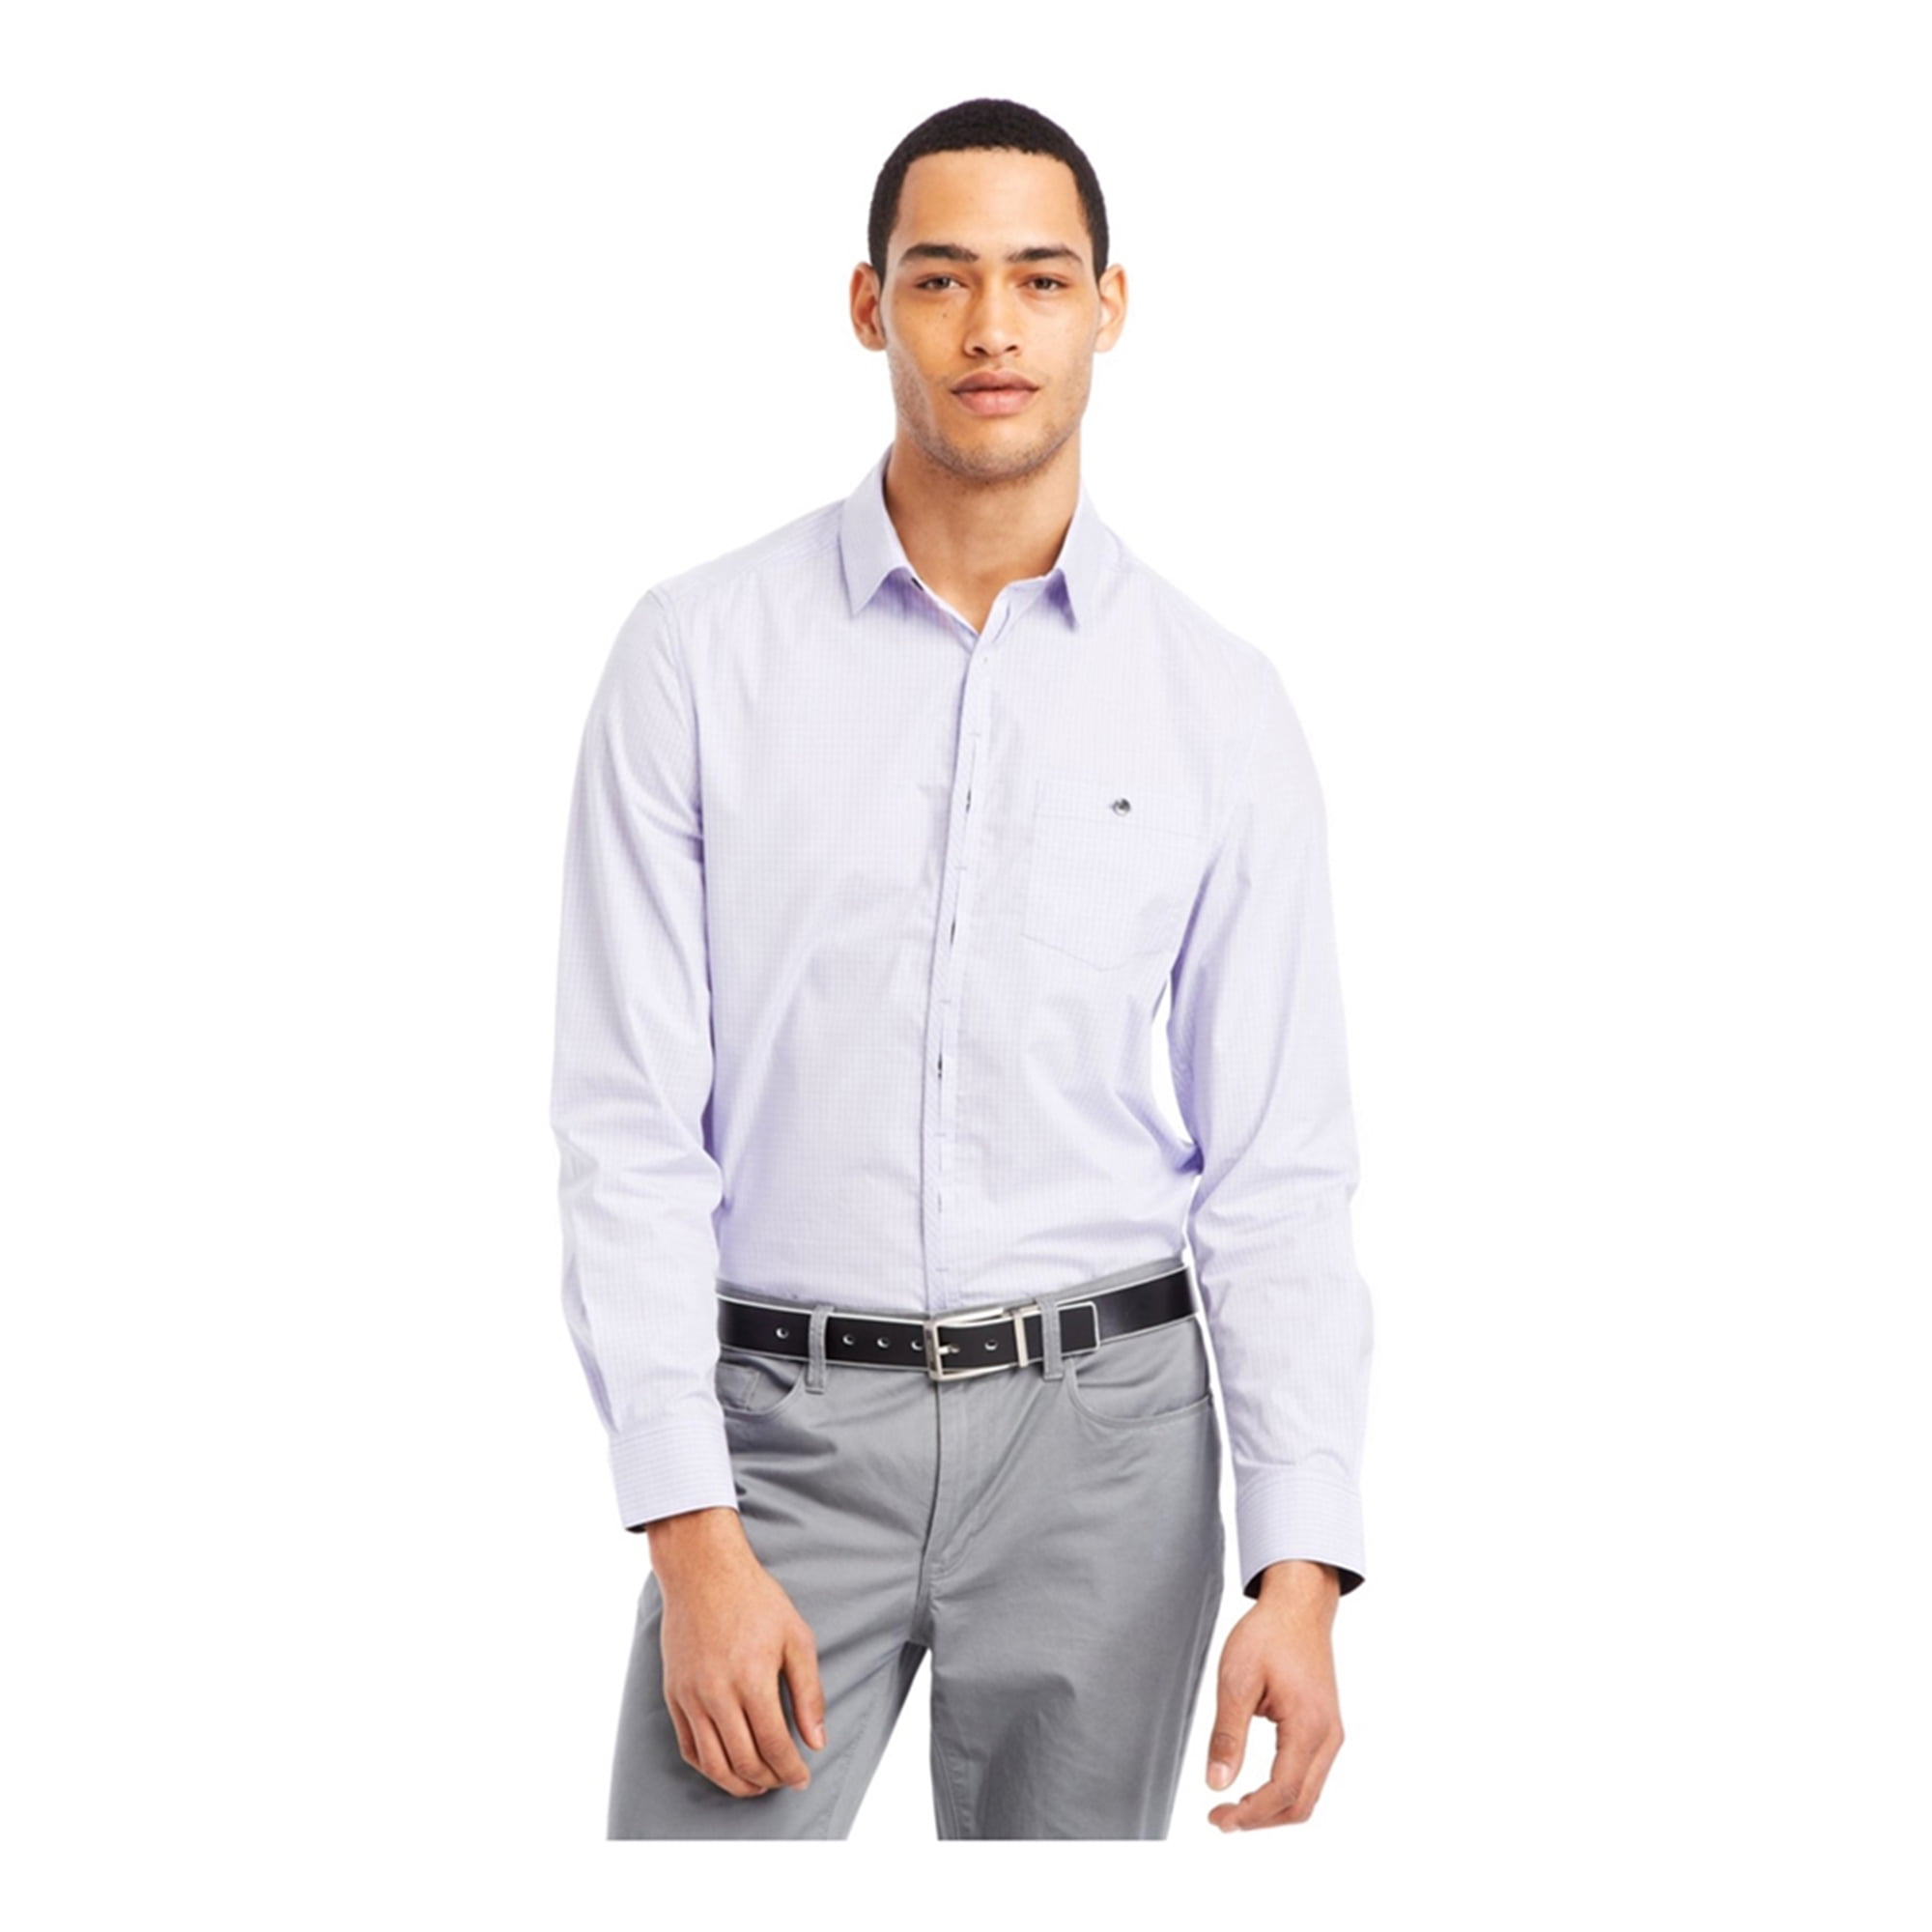 Formal Purple Pocket Men's Button Down Dress Shirts Long Sleeve Slim Fit Shirt 